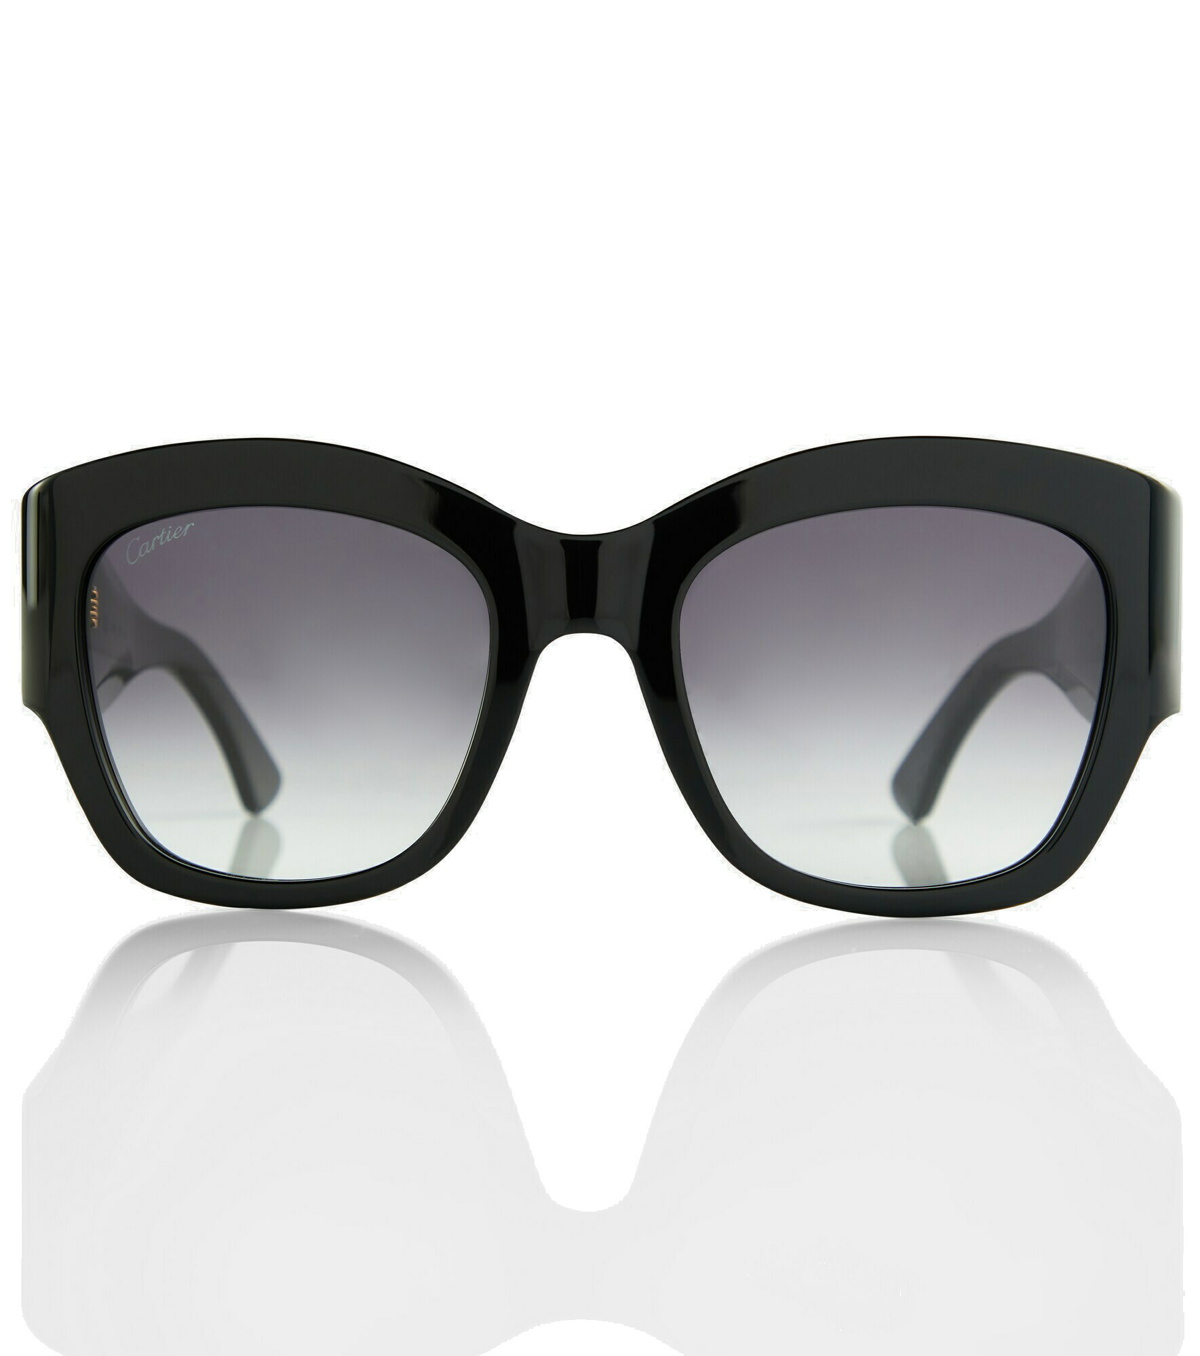 Photo: Cartier Eyewear Collection - Signature C de Cartier sunglasses